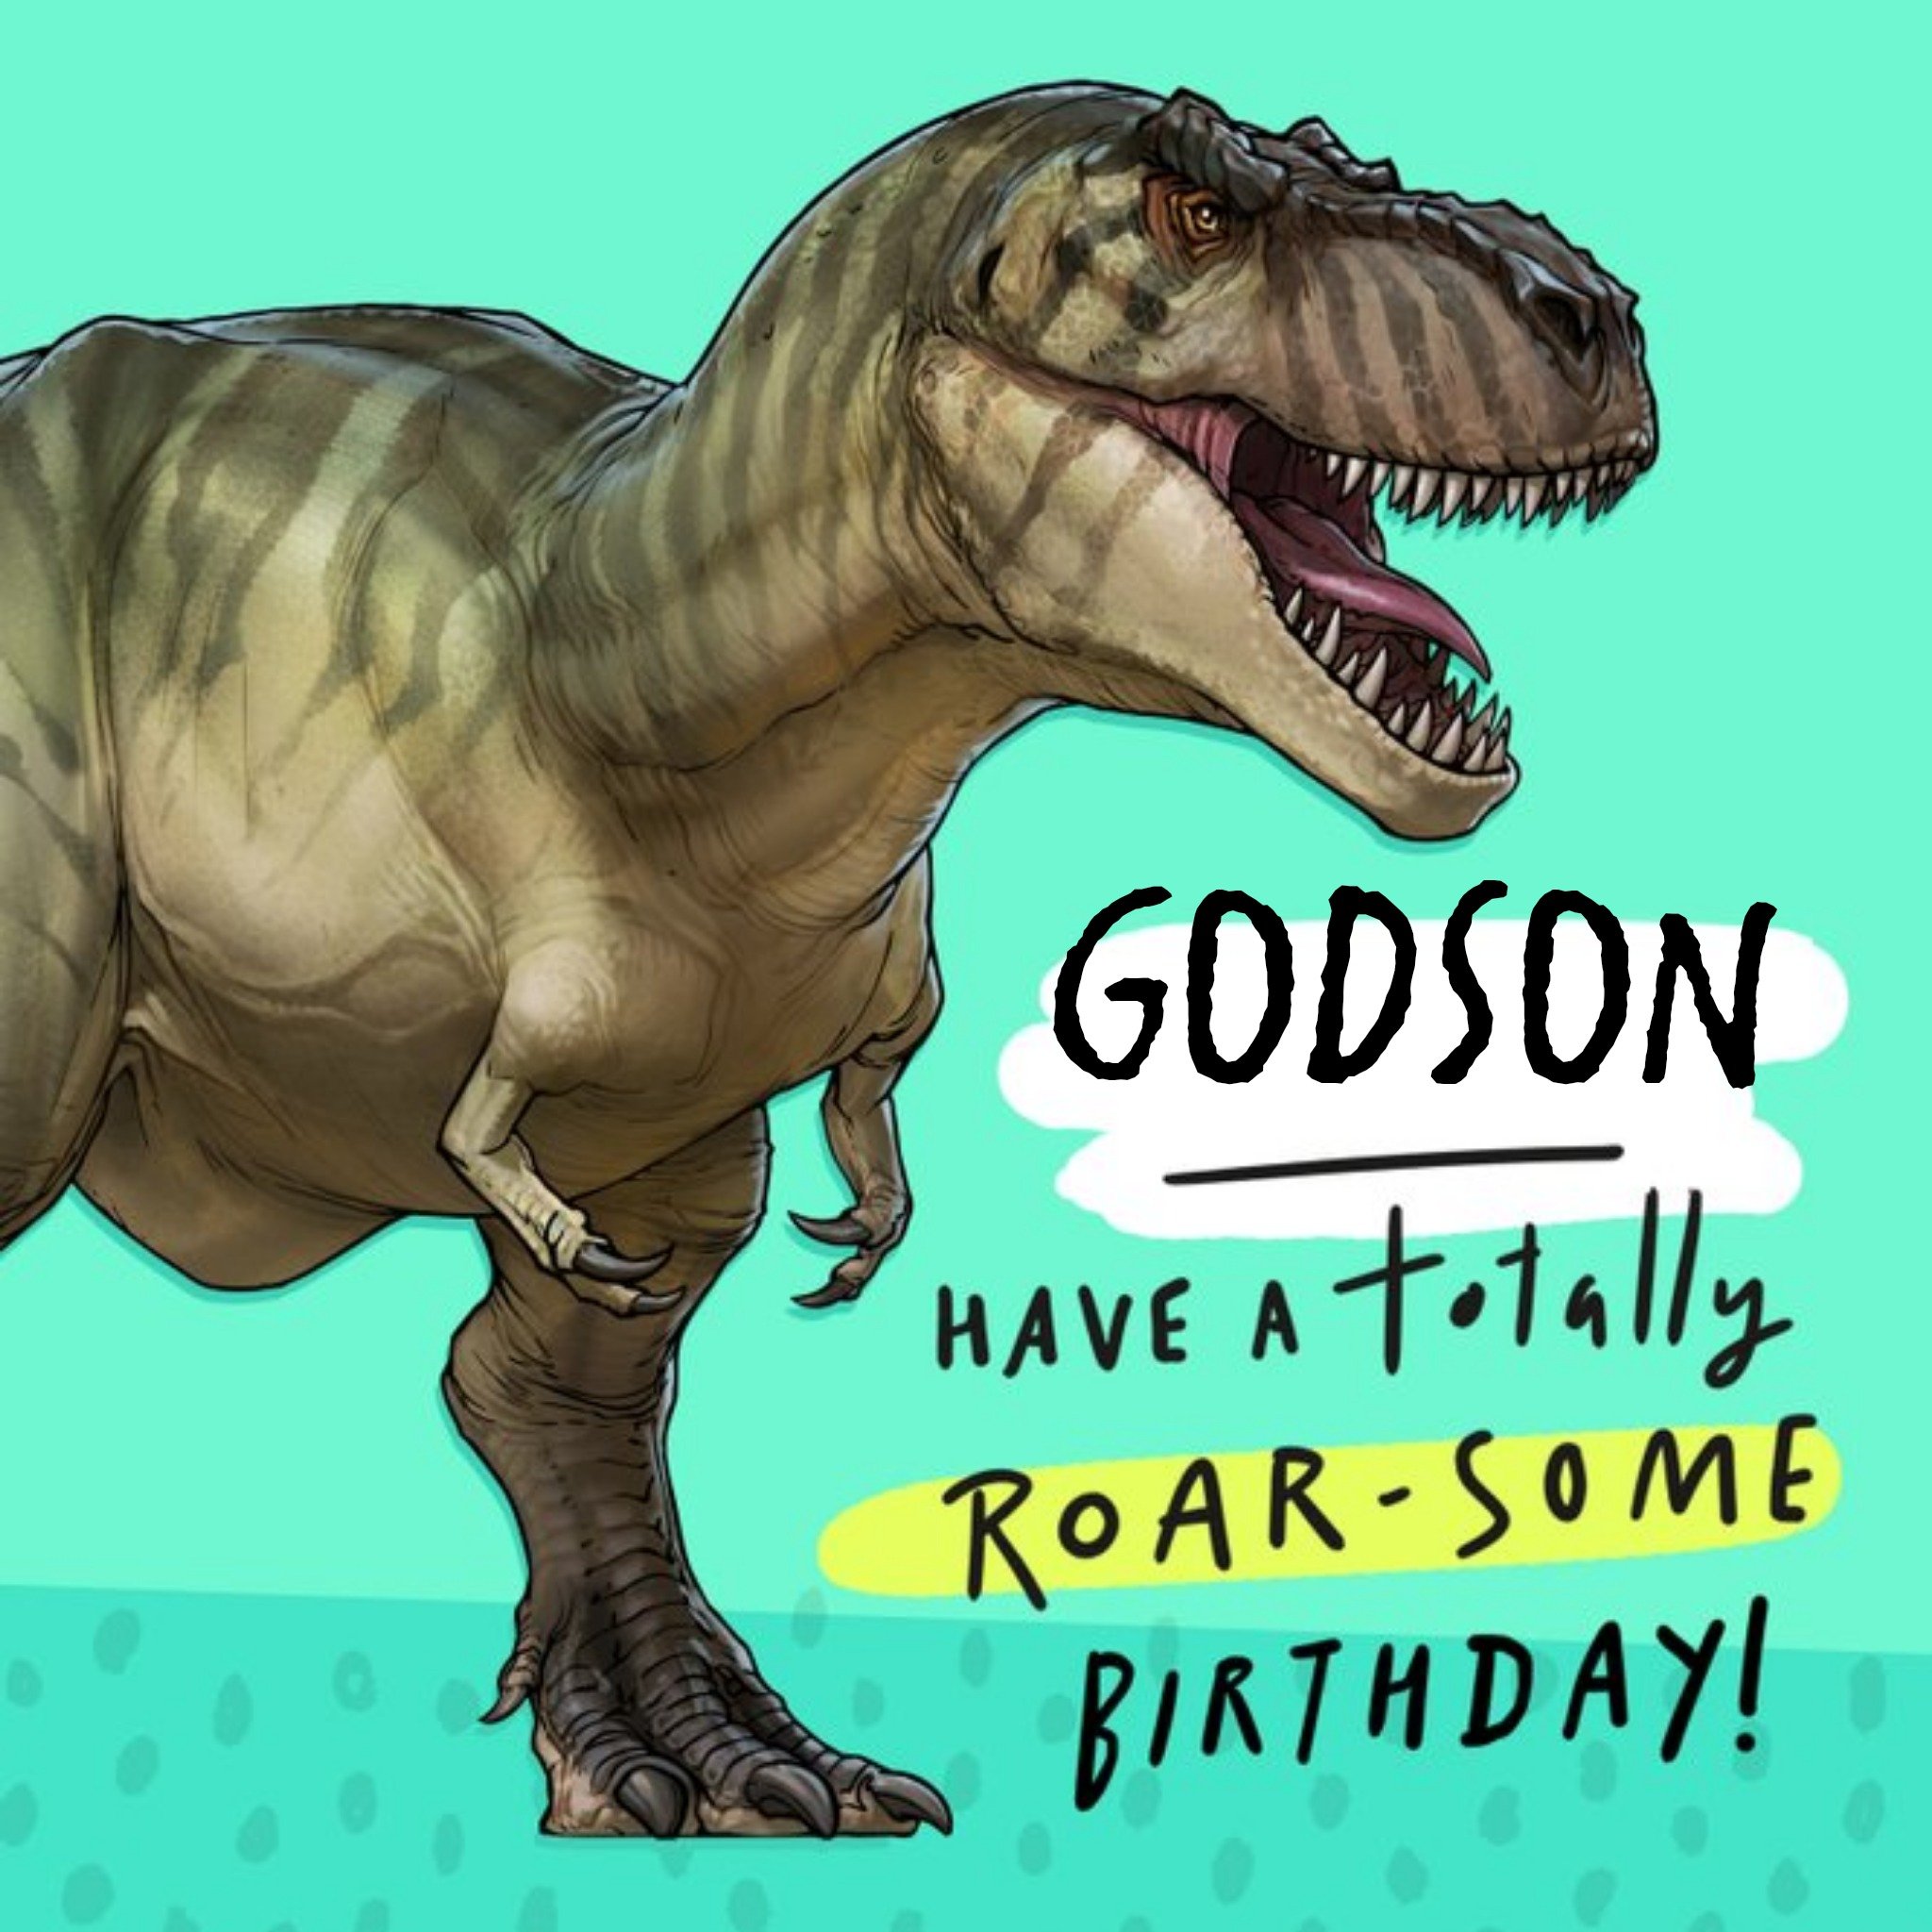 The Natural History Museum Dinosaur Godson Birthday Card - Tyrannosaurus Nhm Natural History Museum,